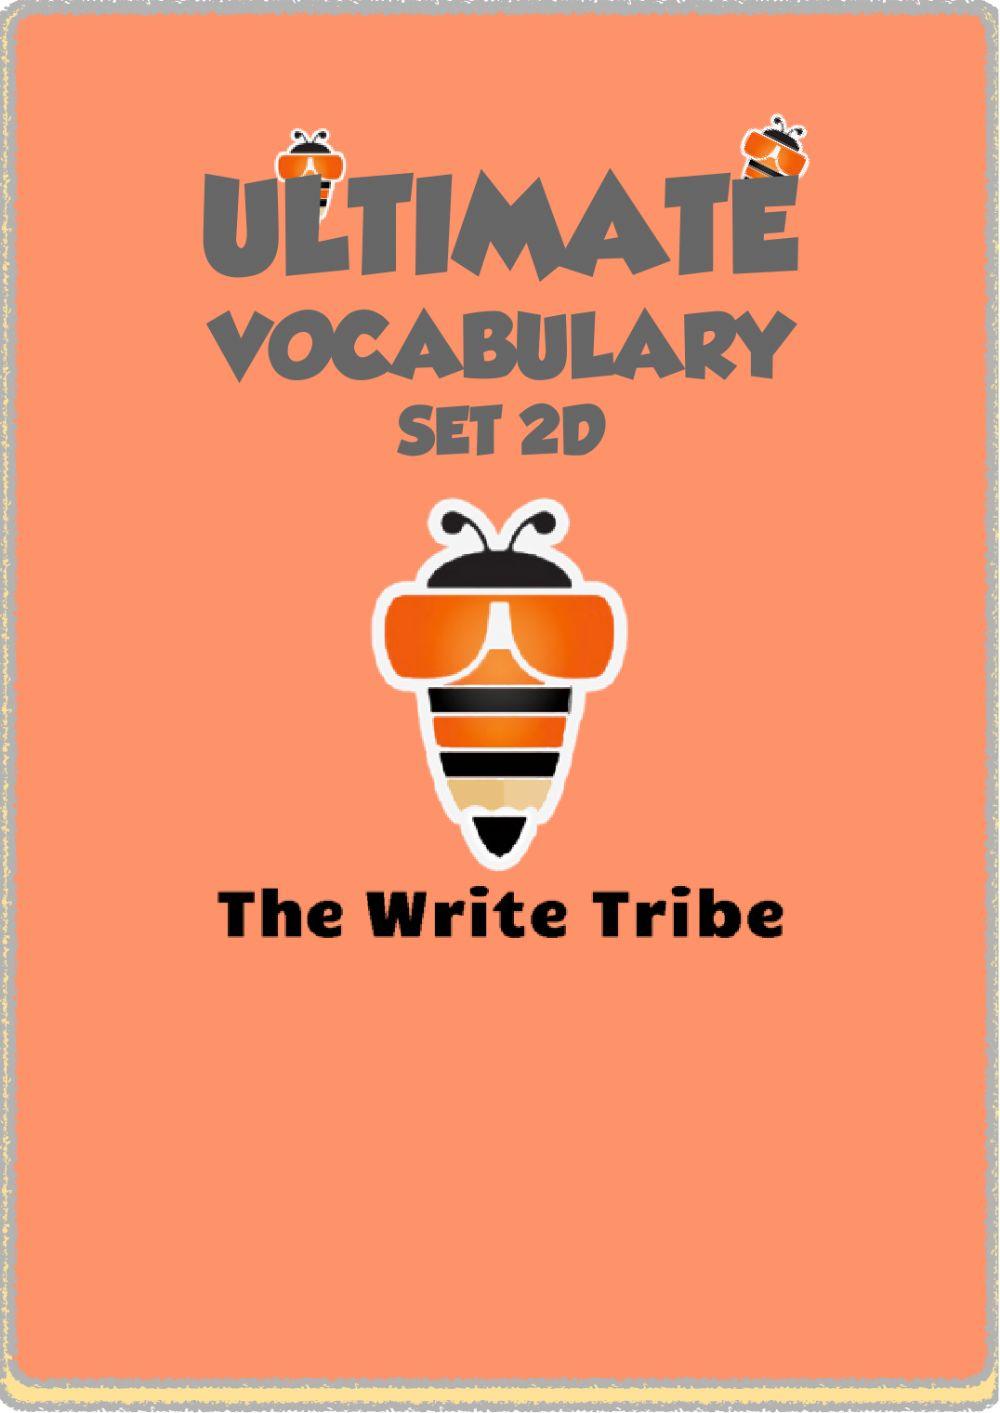 Vocabulary workbook p2 Part D